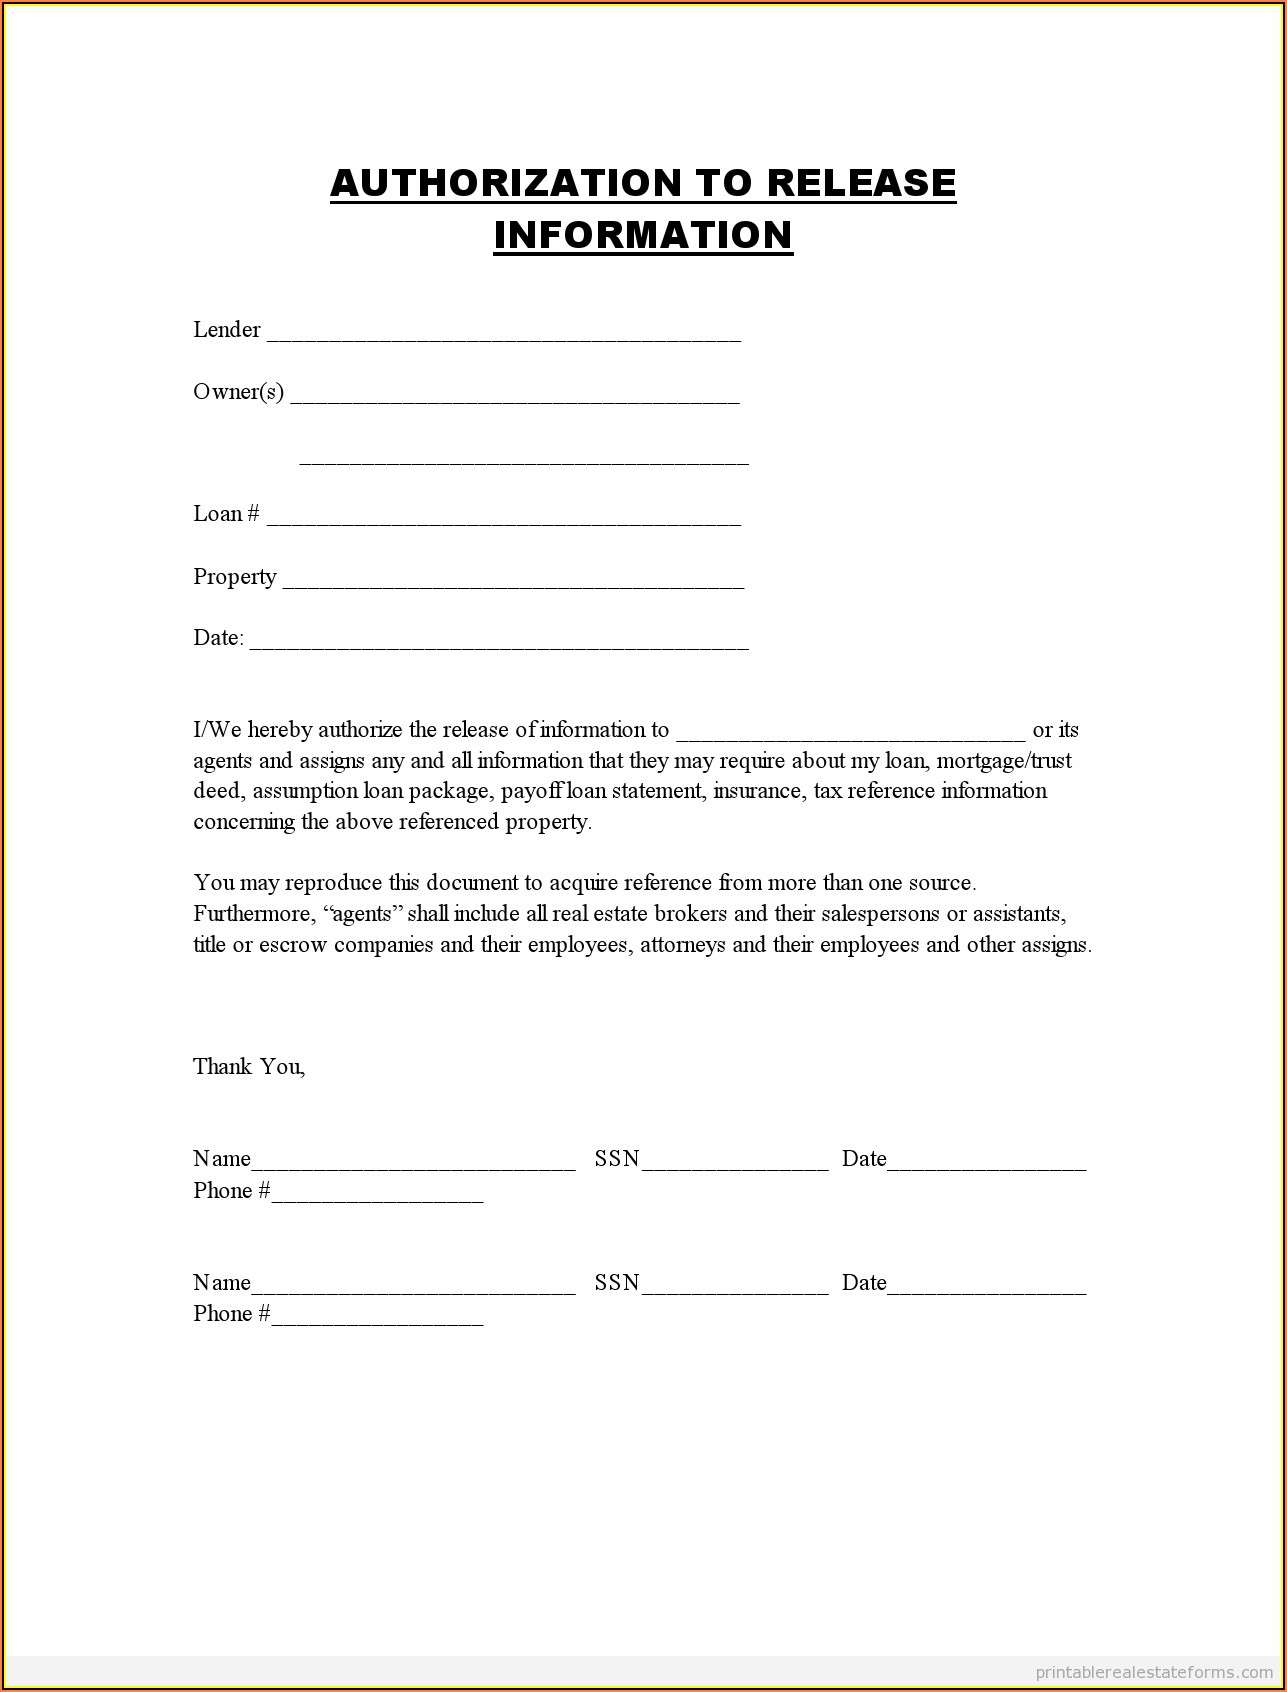 Hipaa Compliant Authorization Form California